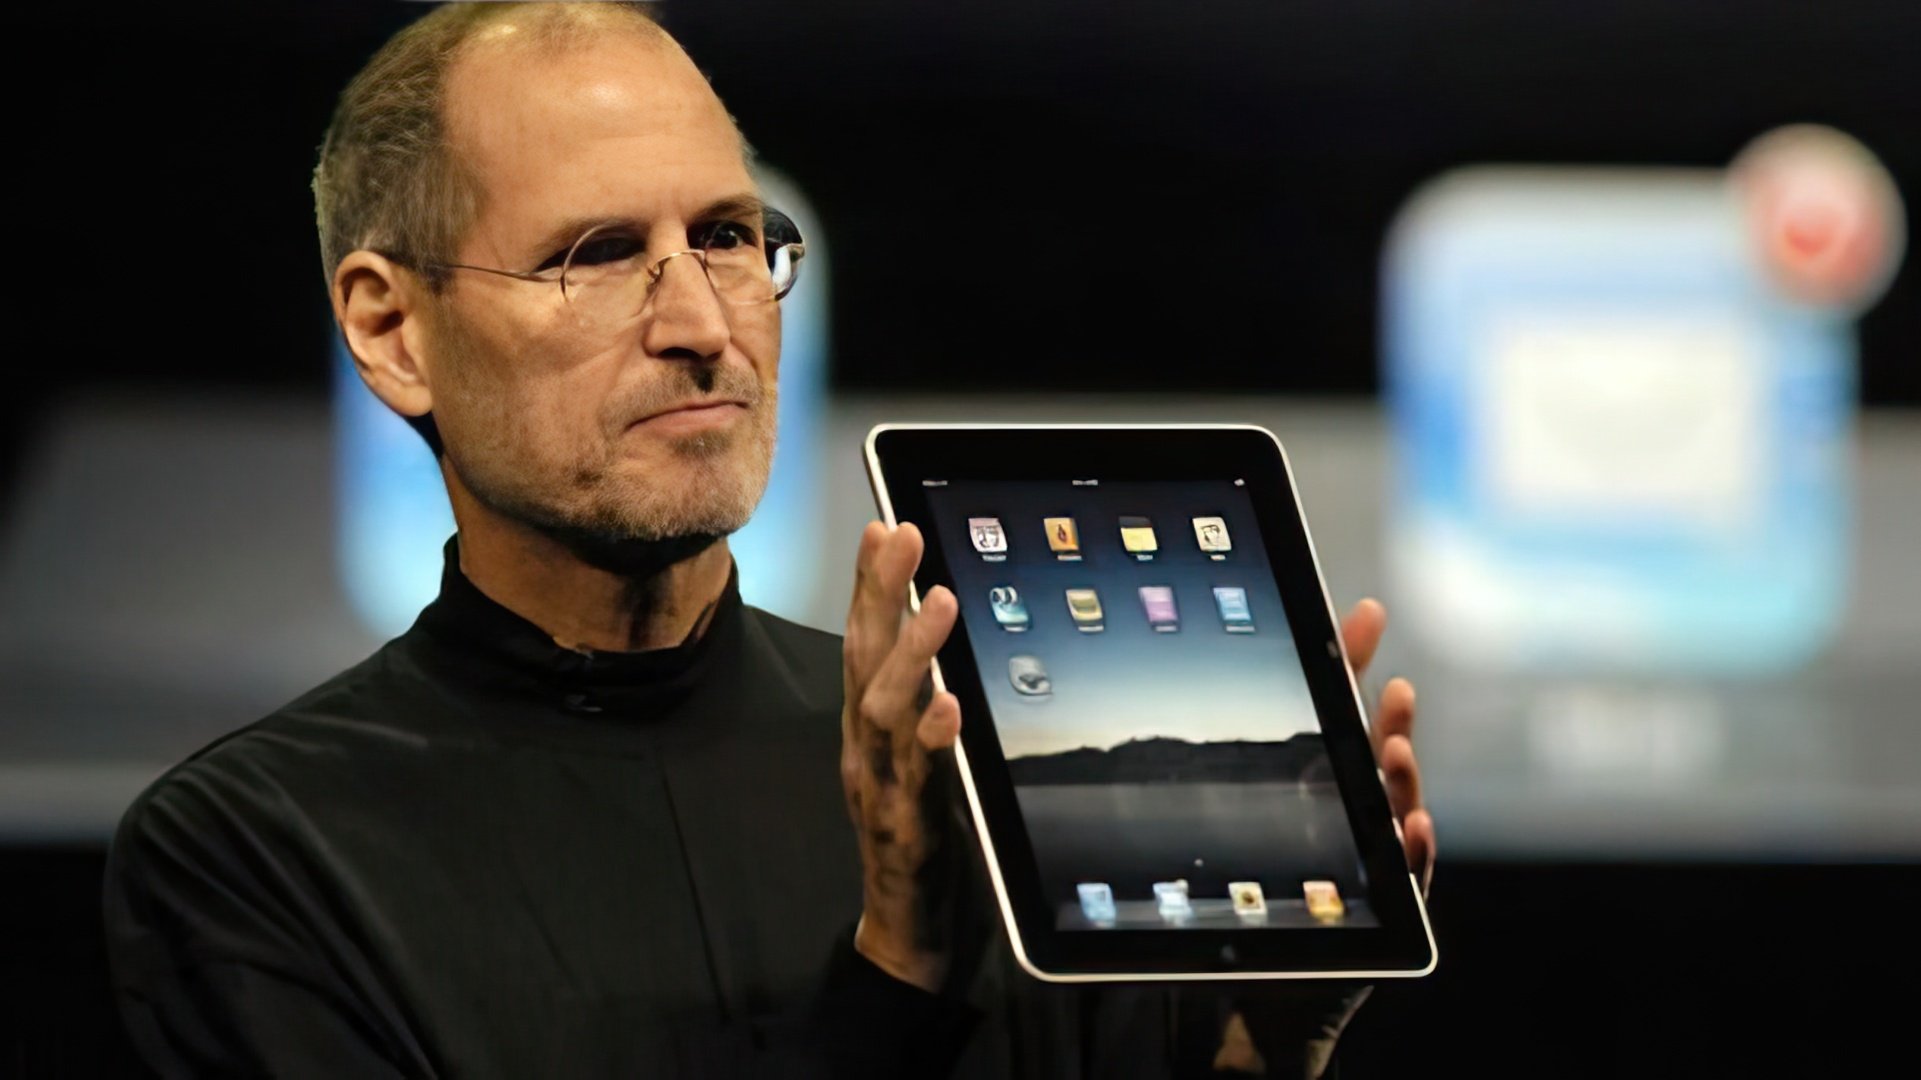 Steve Jobs presents the first iPad